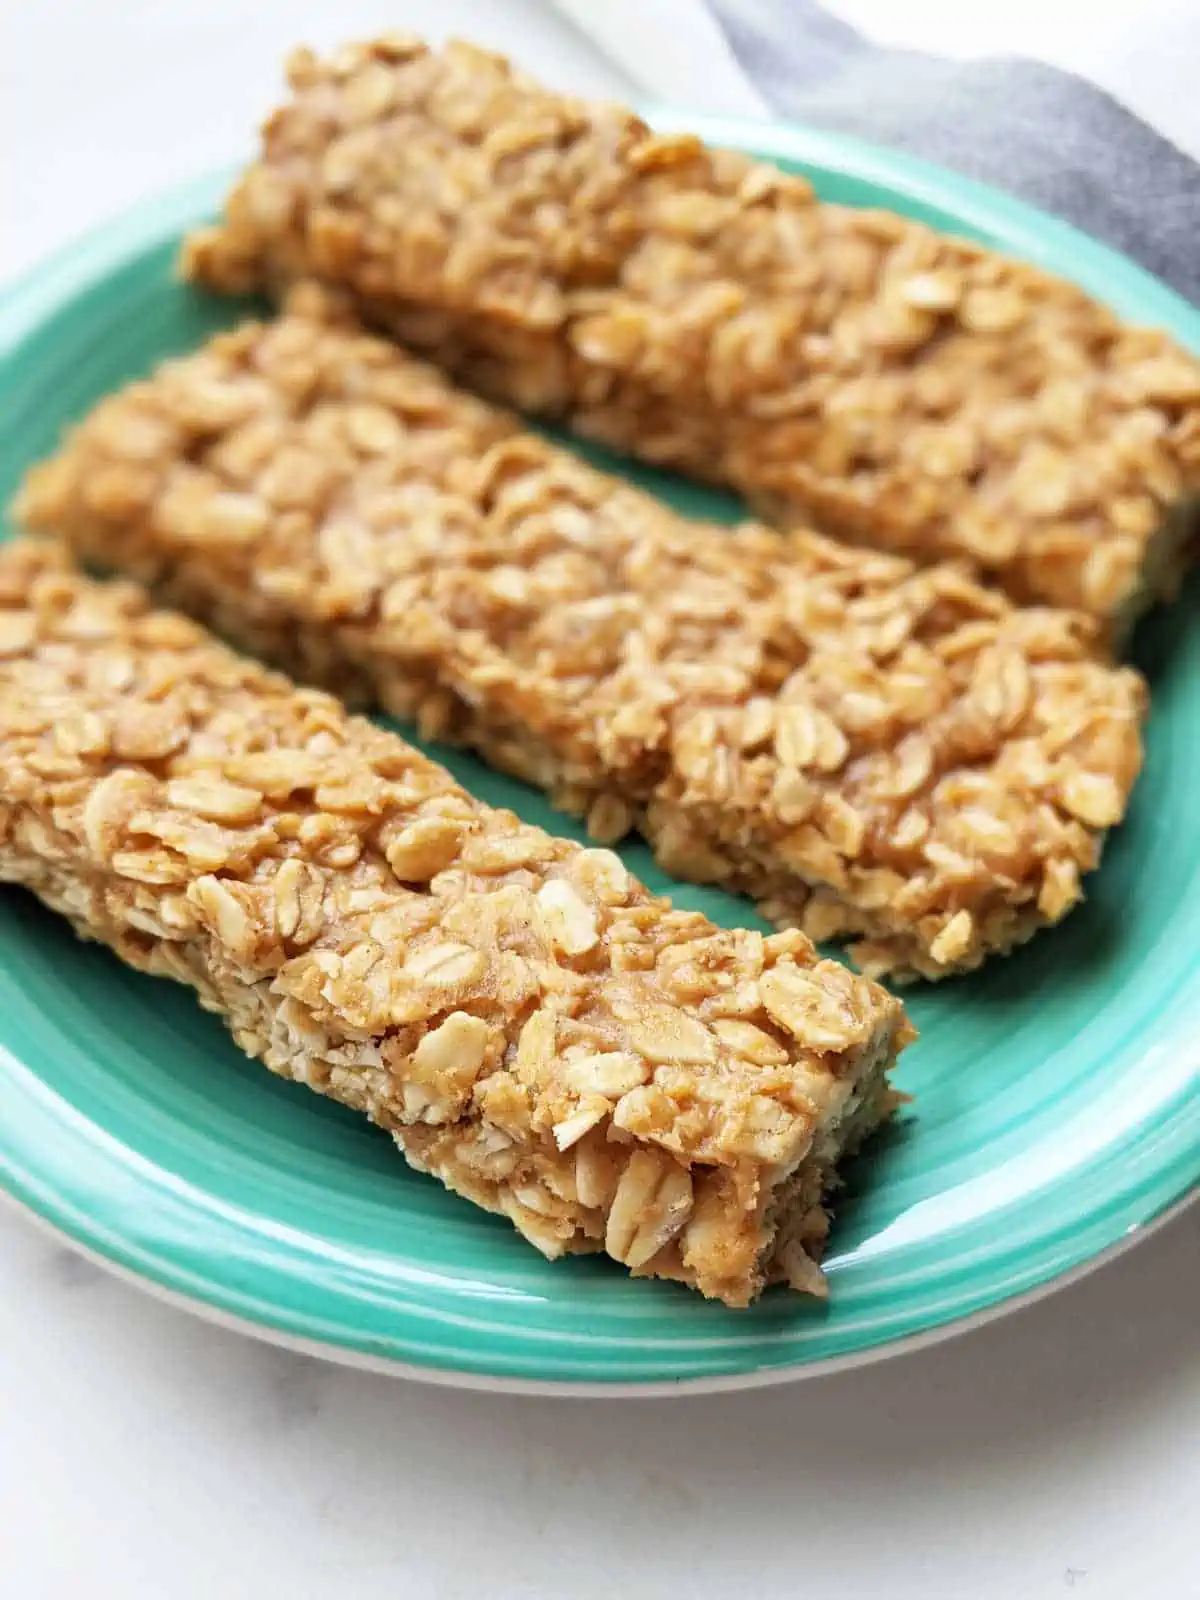 Three vegan gluten free granola bars on a plate.